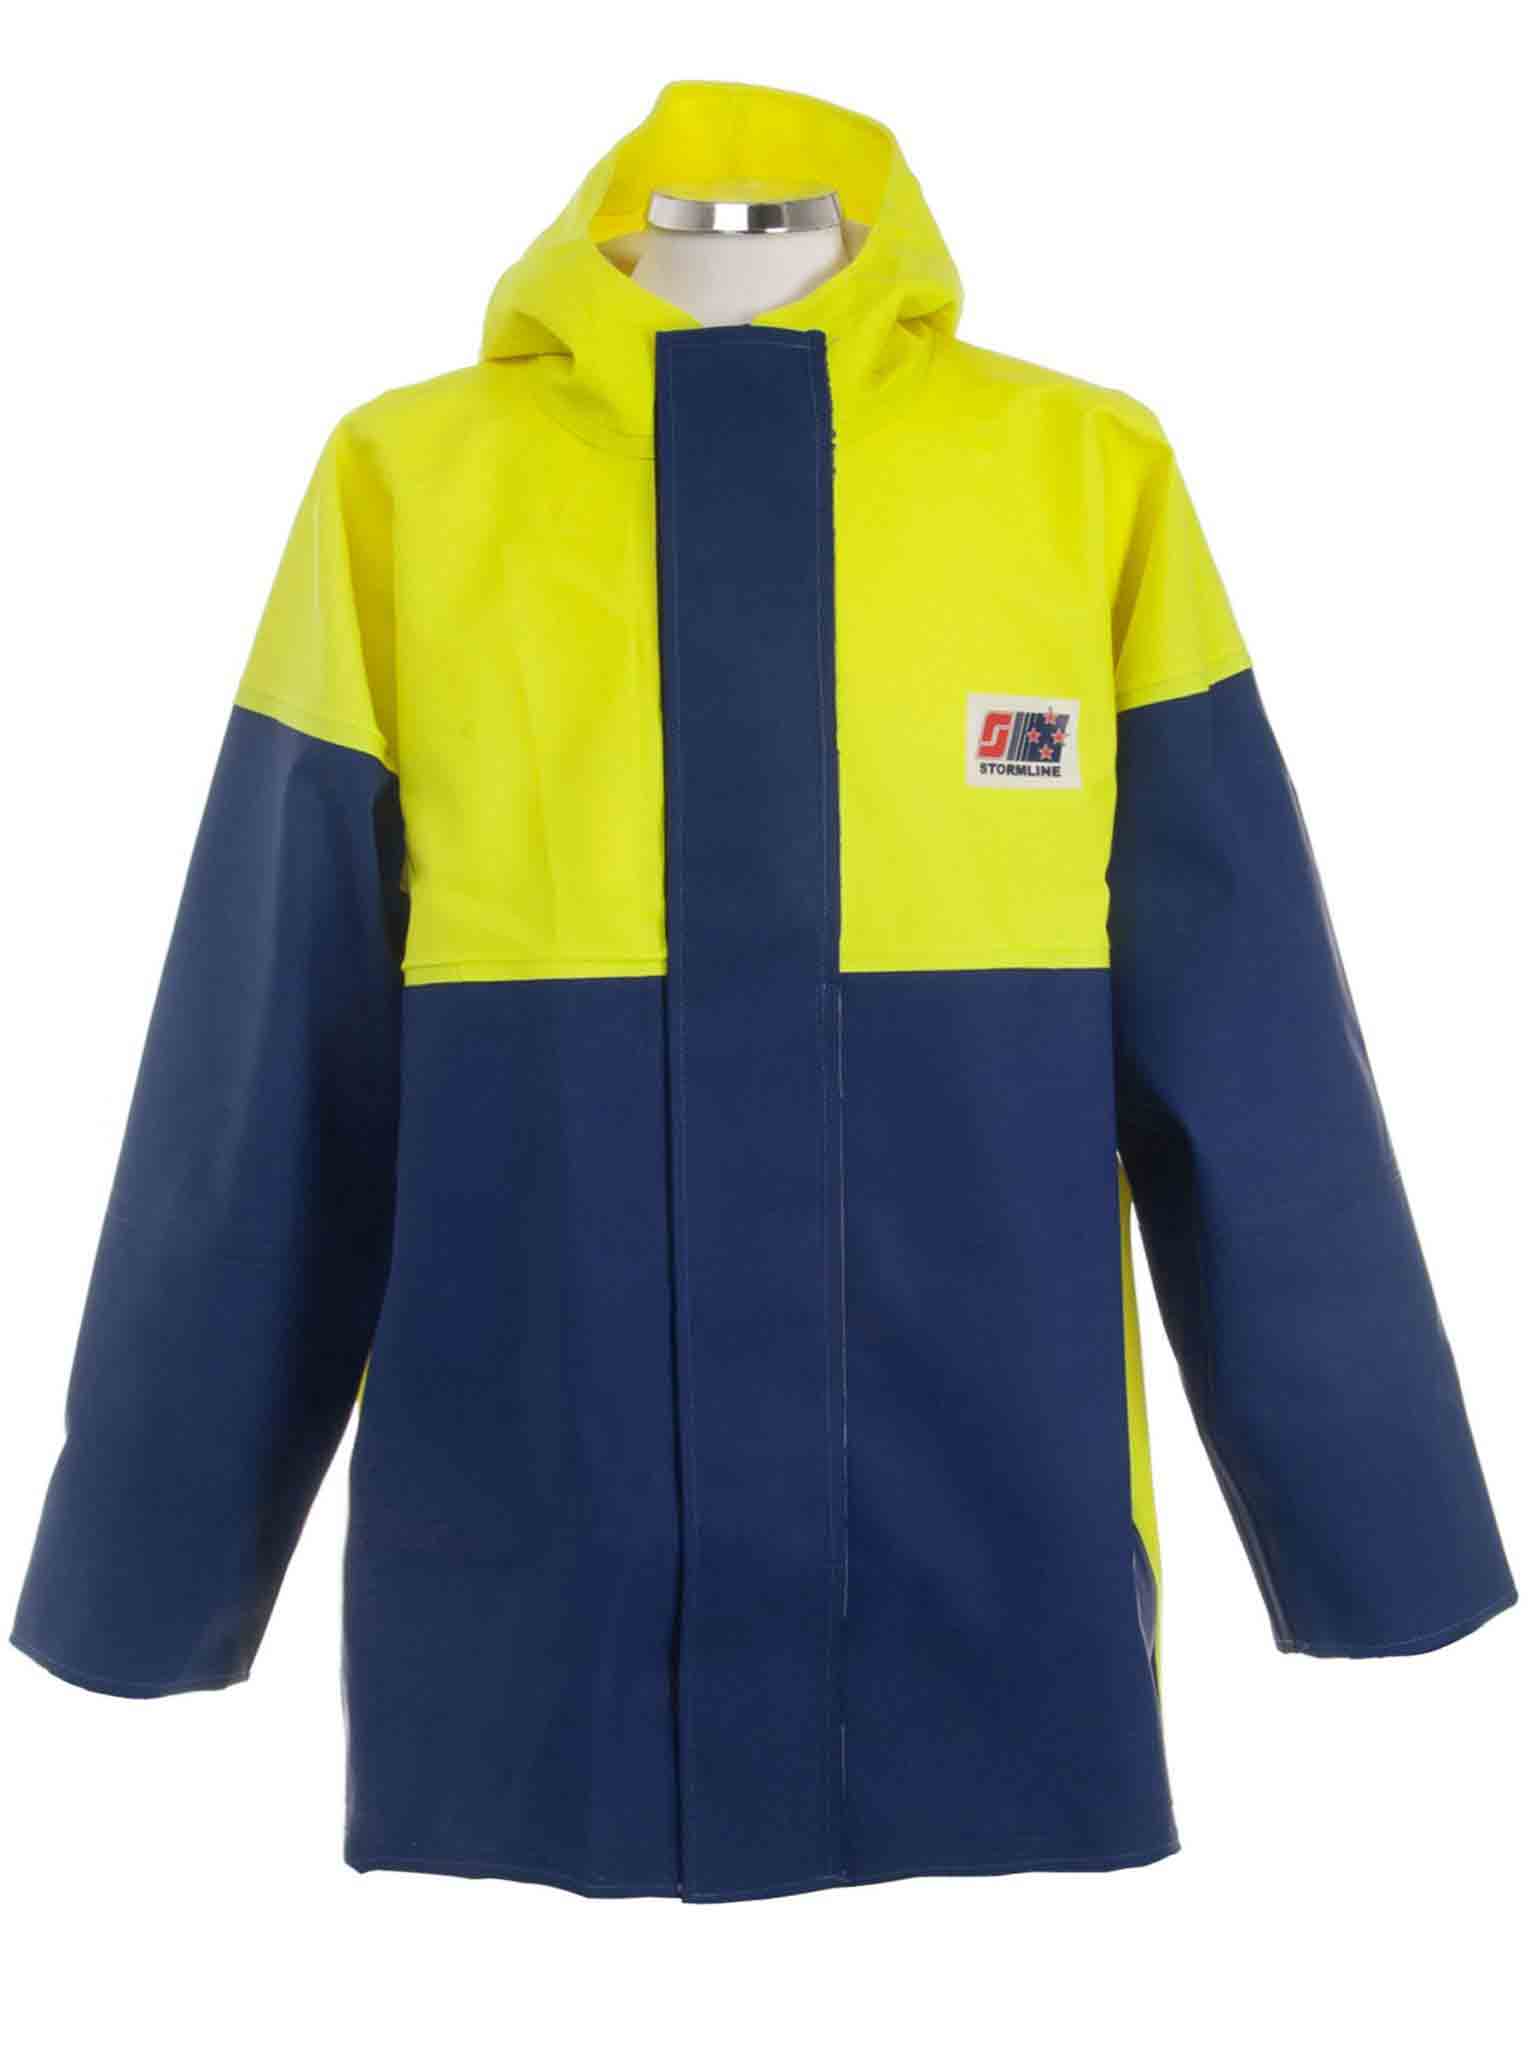 Stormline Commercial Fishing Rain Gear Jacket 2XL XL Free Shipping 